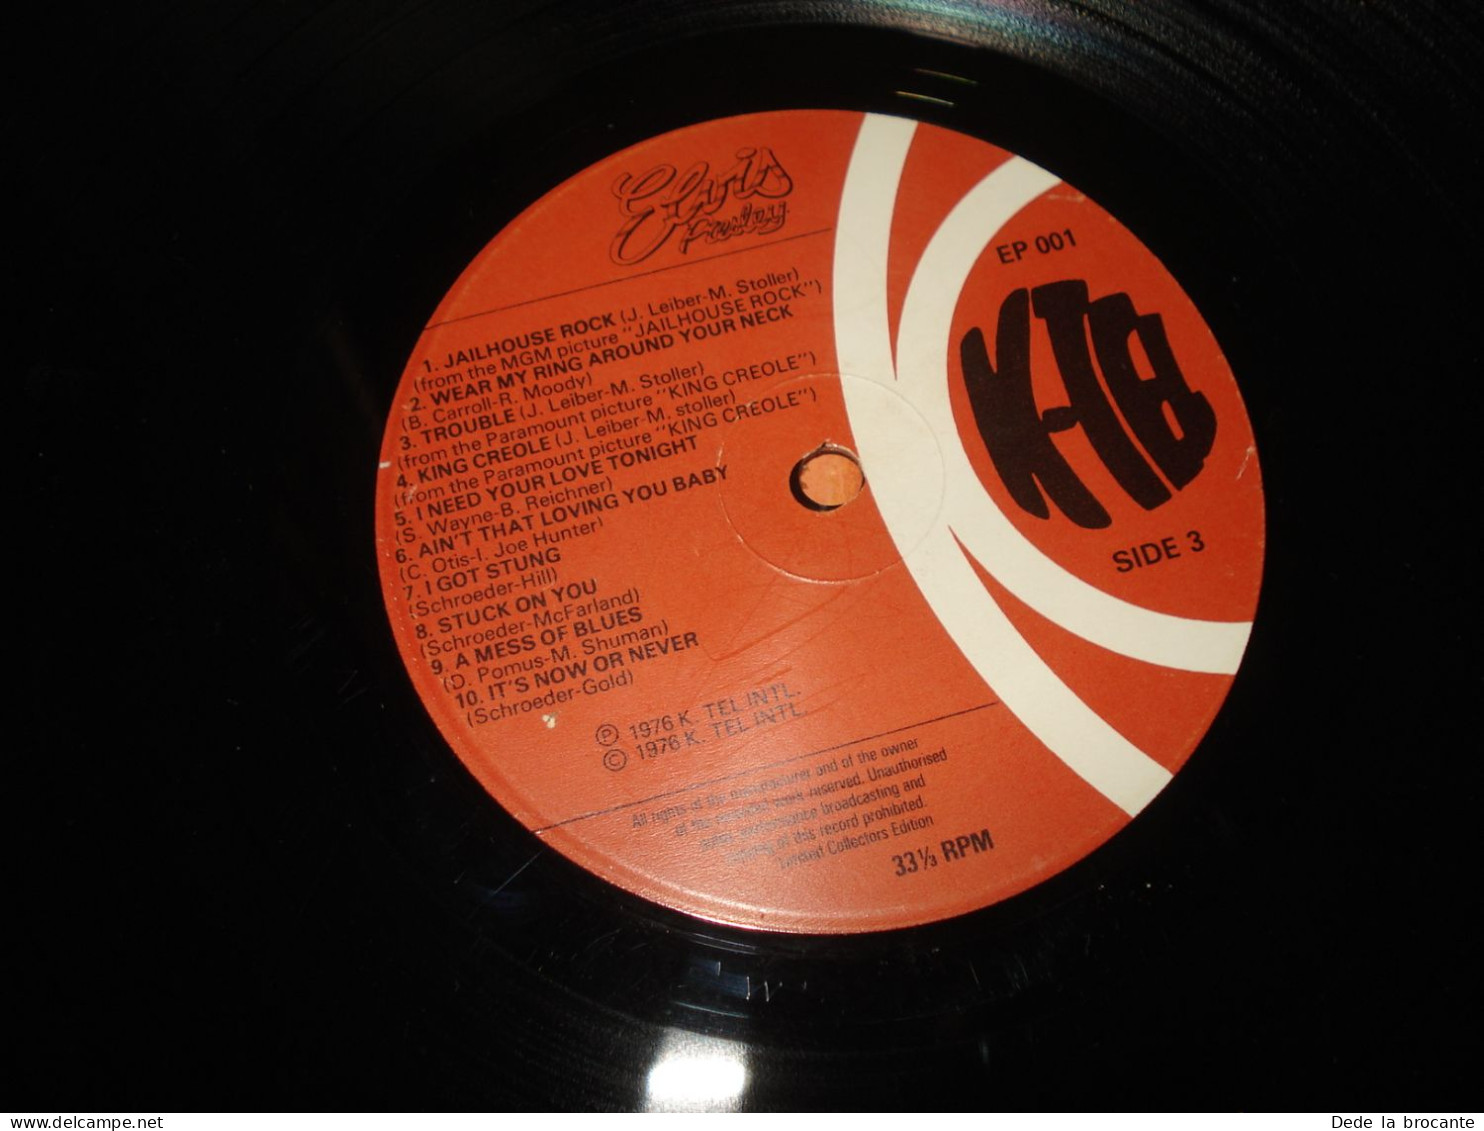 B11 (8)/ Elvis " Le roi du " - Double album - K TEL - EP 001 - Fr 1976 - VG+/VG+